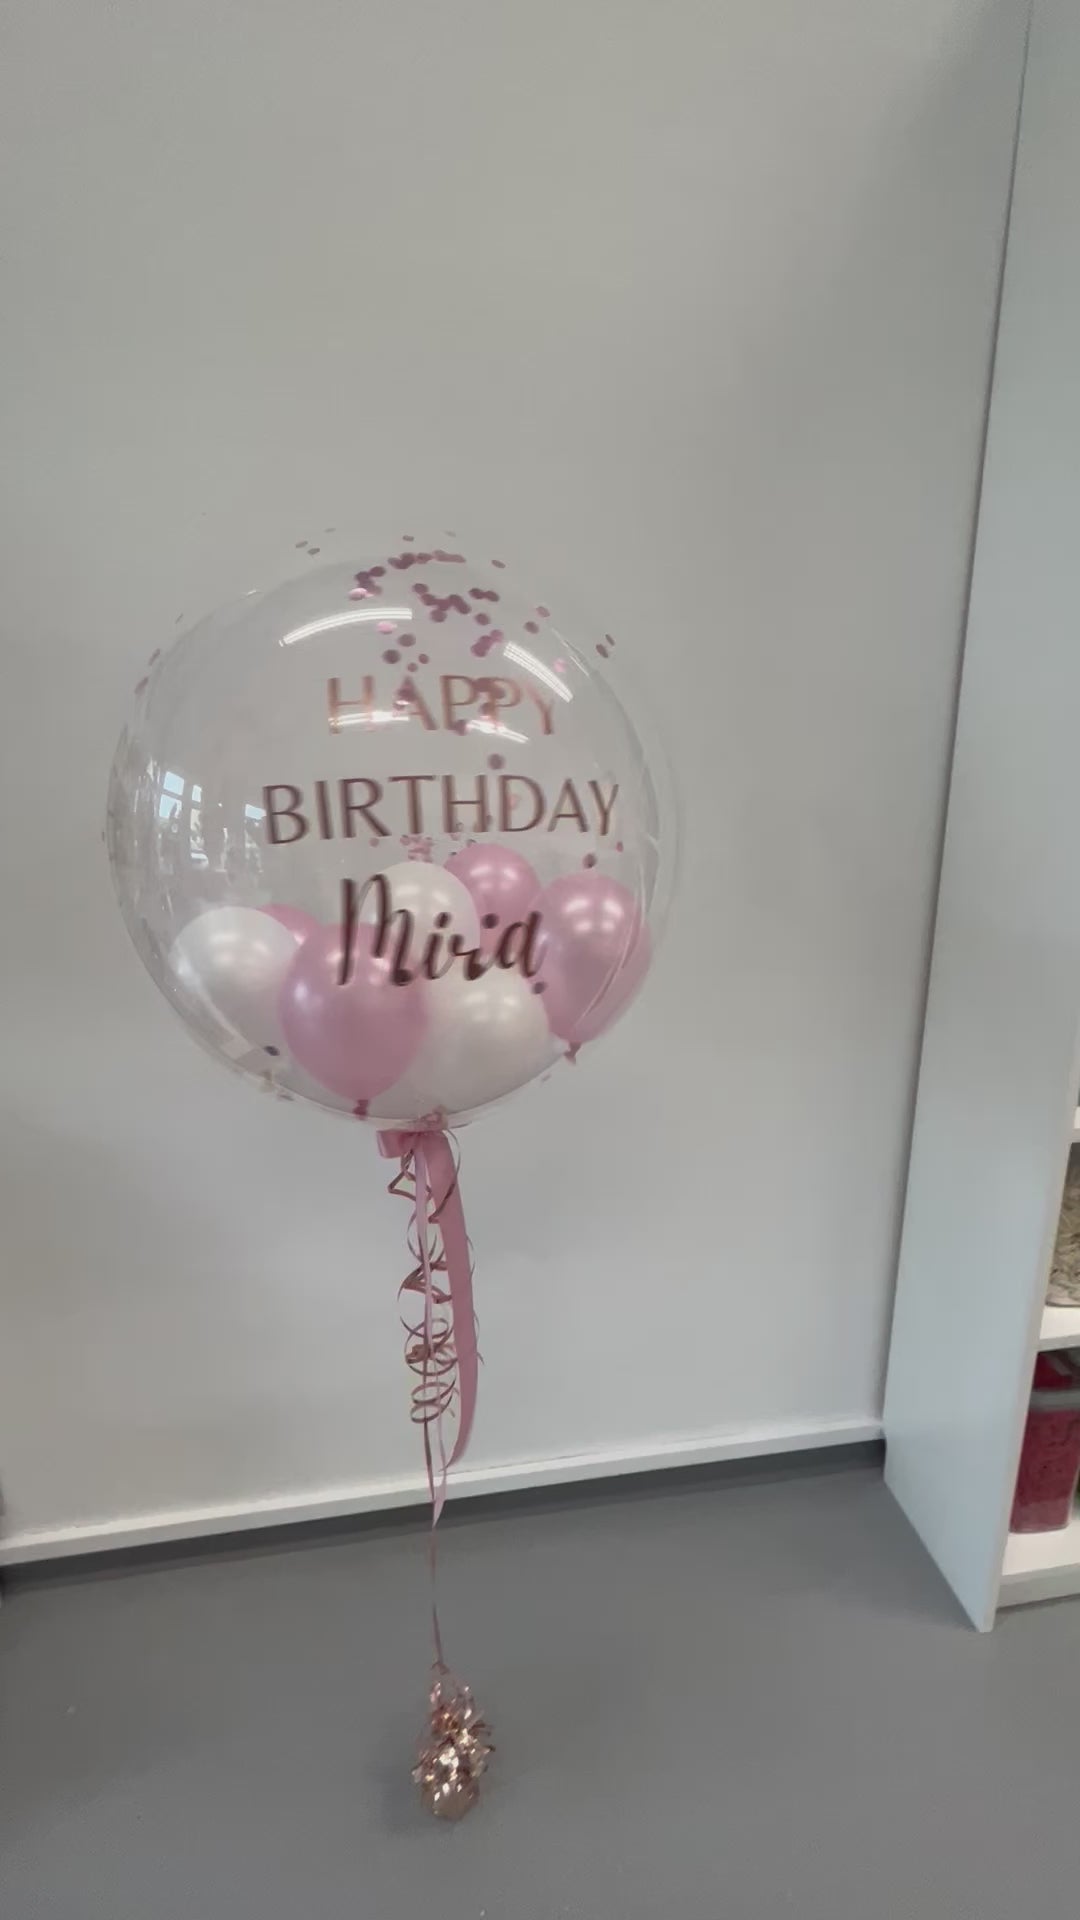 PREMIUM DECO BUBBLE BALLON pearl white & pearl rosa | personalisiert mit Wunschtext | gefüllt mit Ballons & Konfetti | inklusive Beschriftung | ca. 60cm | inkl. Heliumfüllung und Beschwerung (Nur Abholung)